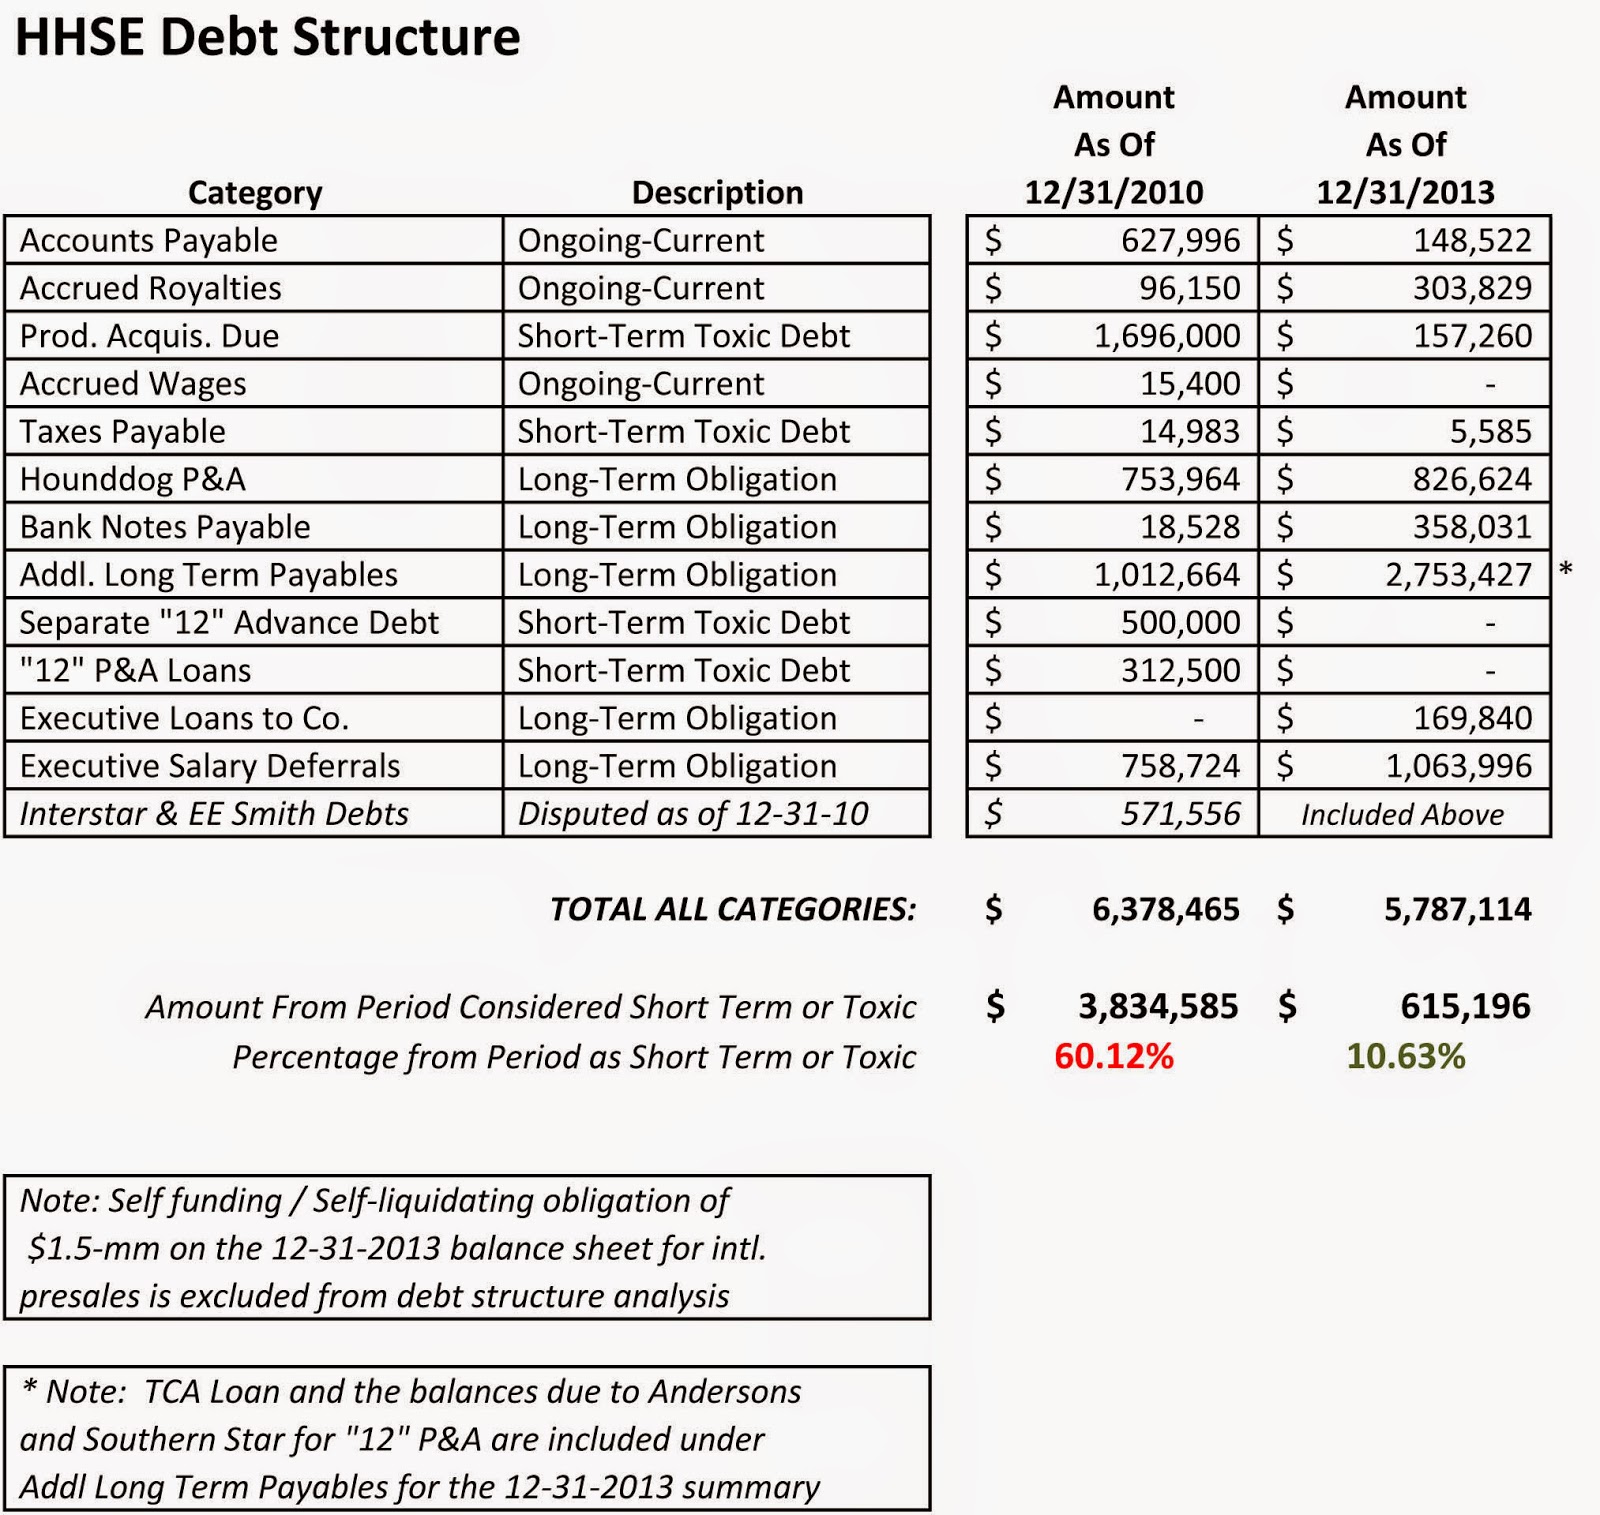 HHSE+Debt+Structure.jpg